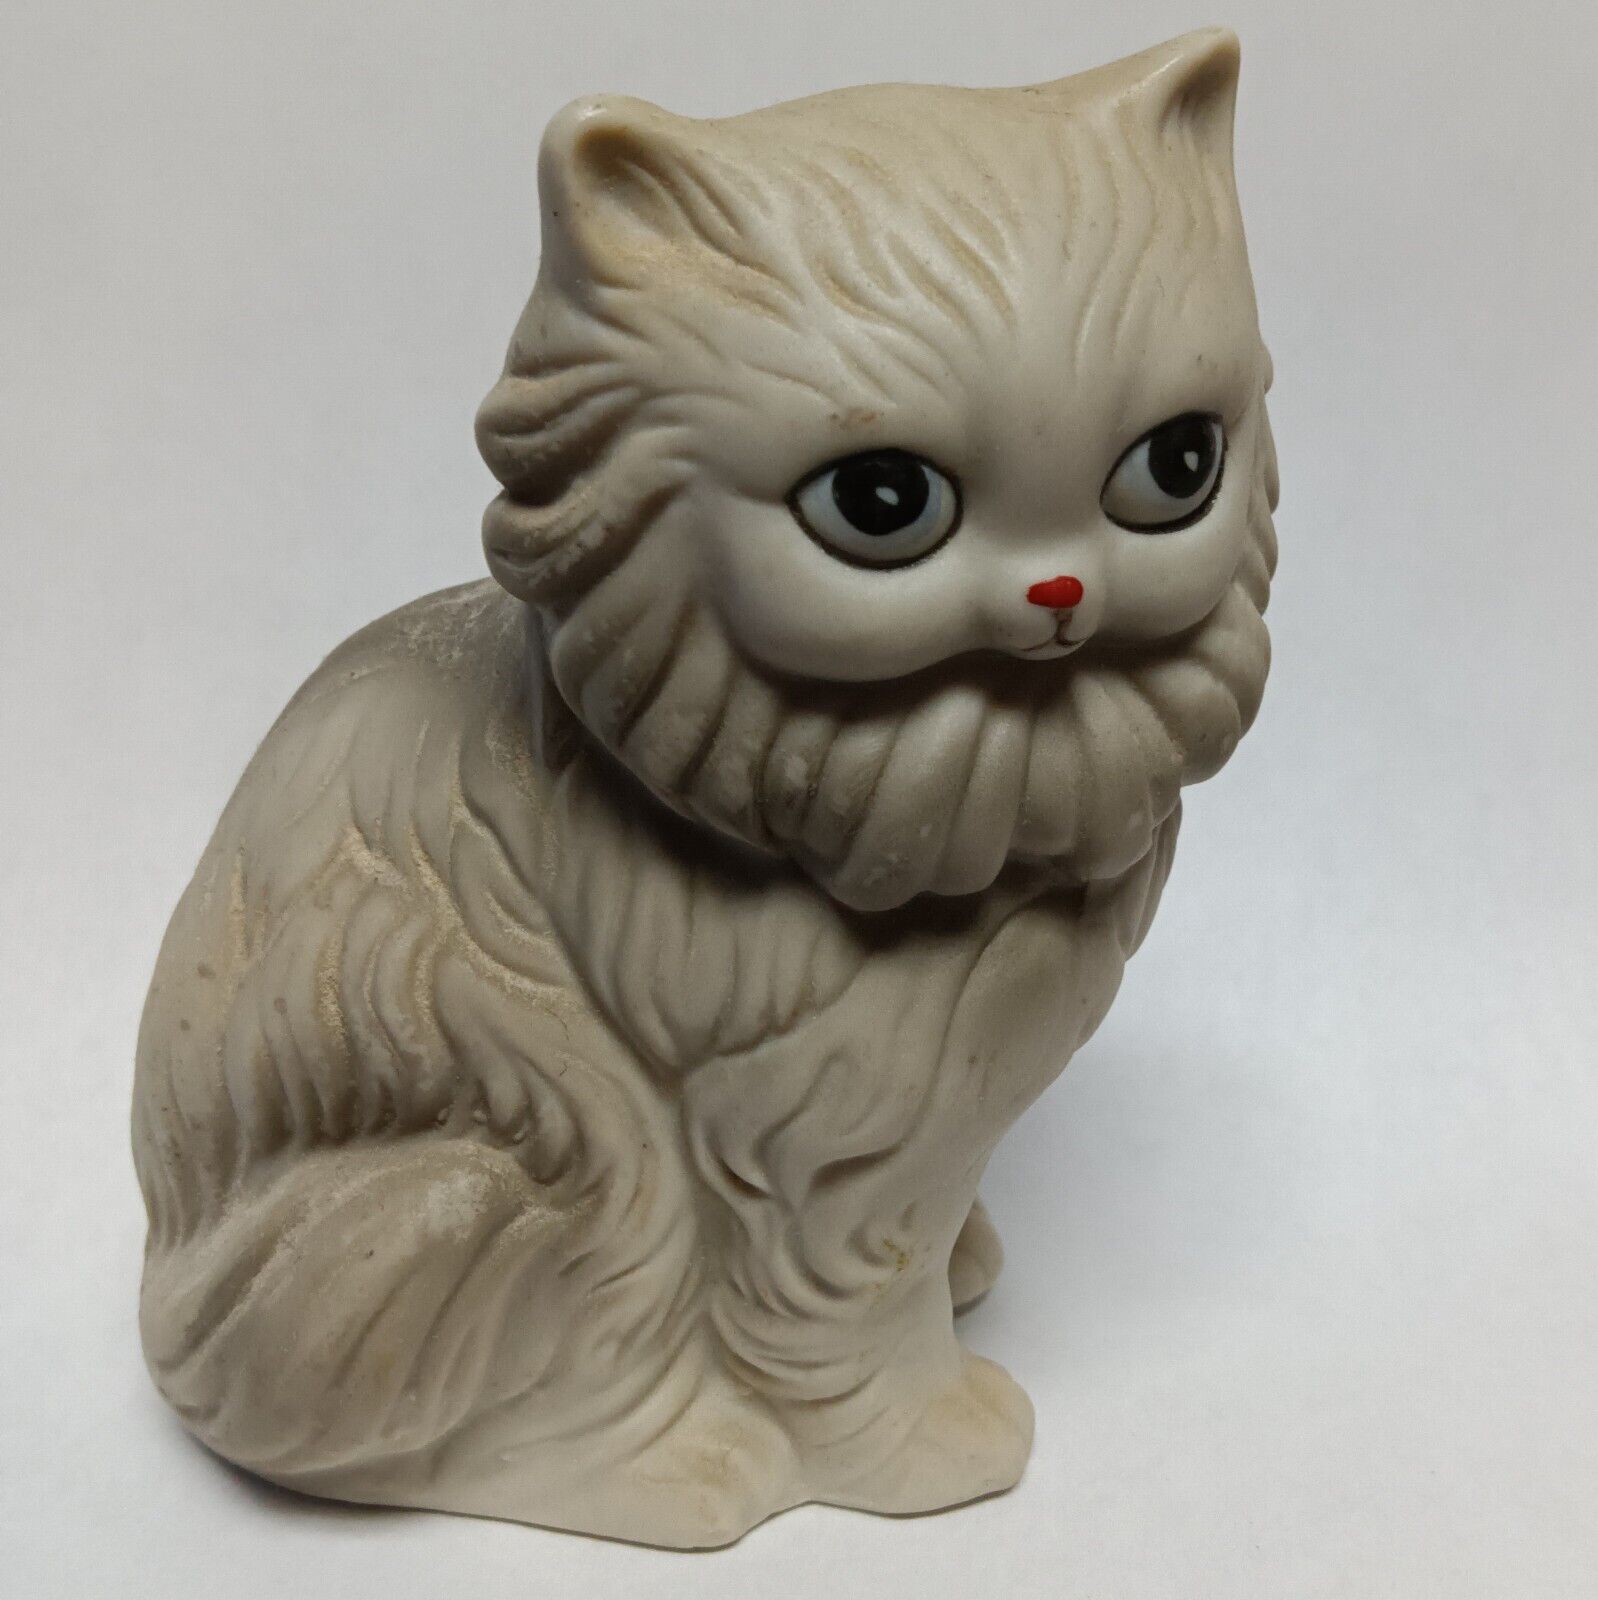 Vintage Miniature Porcelain Cat Figurine Kitty 60s Korea kitsch cute ceramic